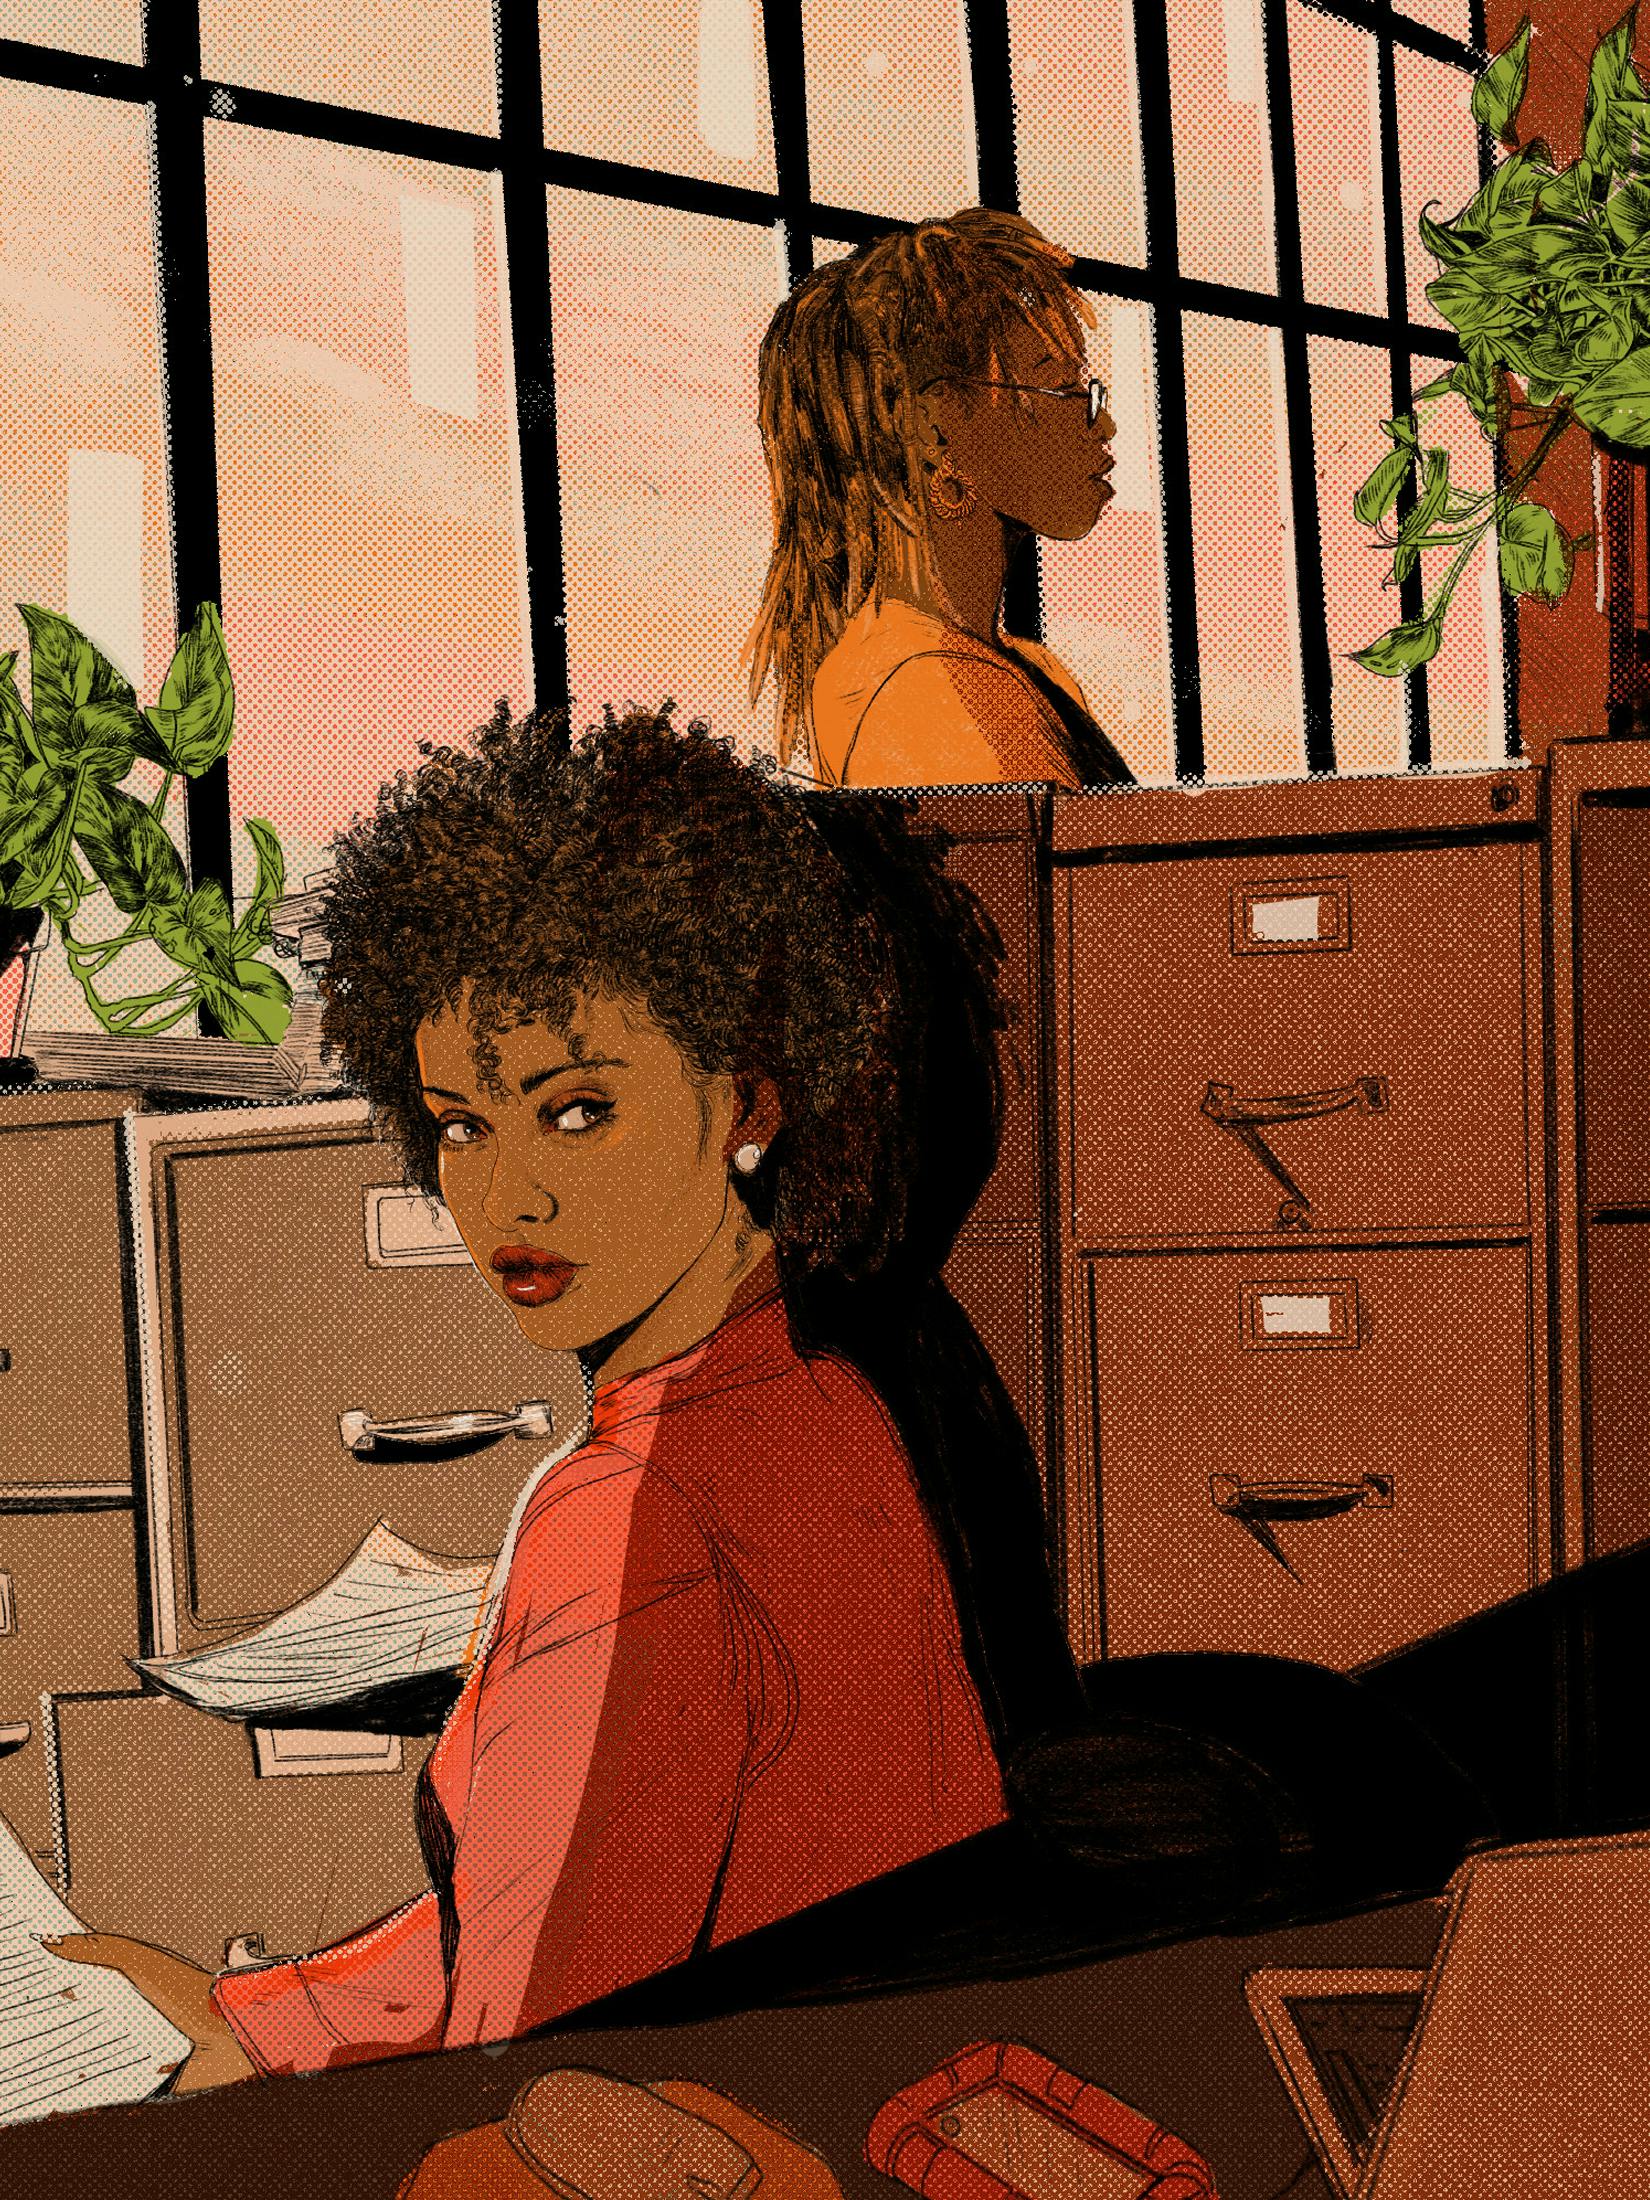 The Other Black Girl: Zakiya Dalila Harris On Tackling Race